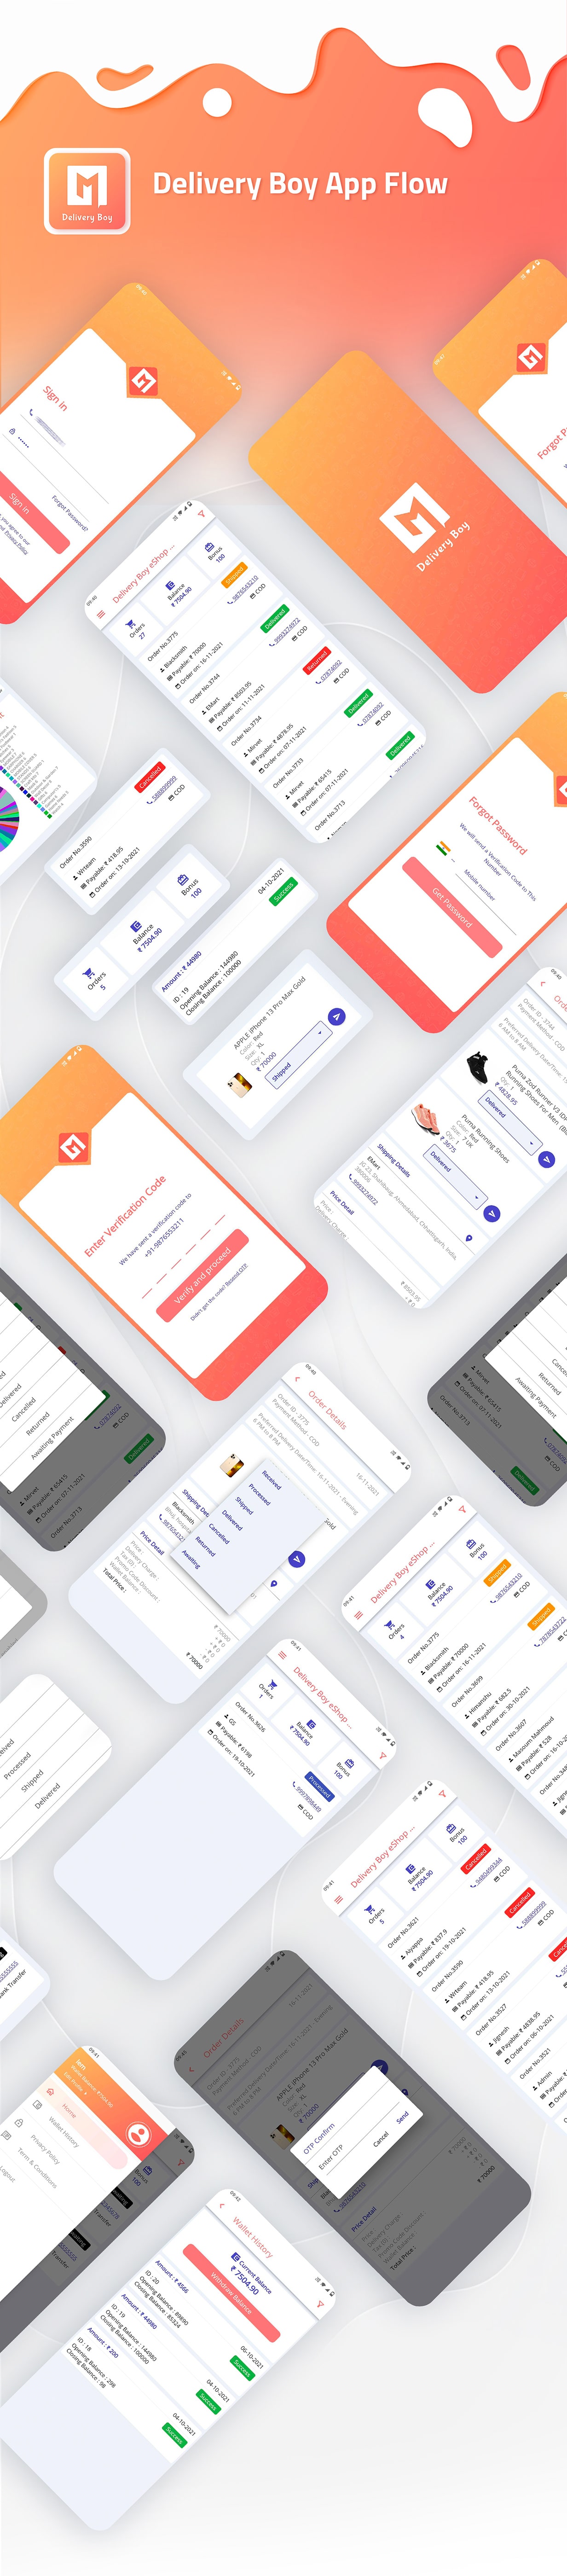 eShop - Flutter Multi Vendor eCommerce Full App - 28